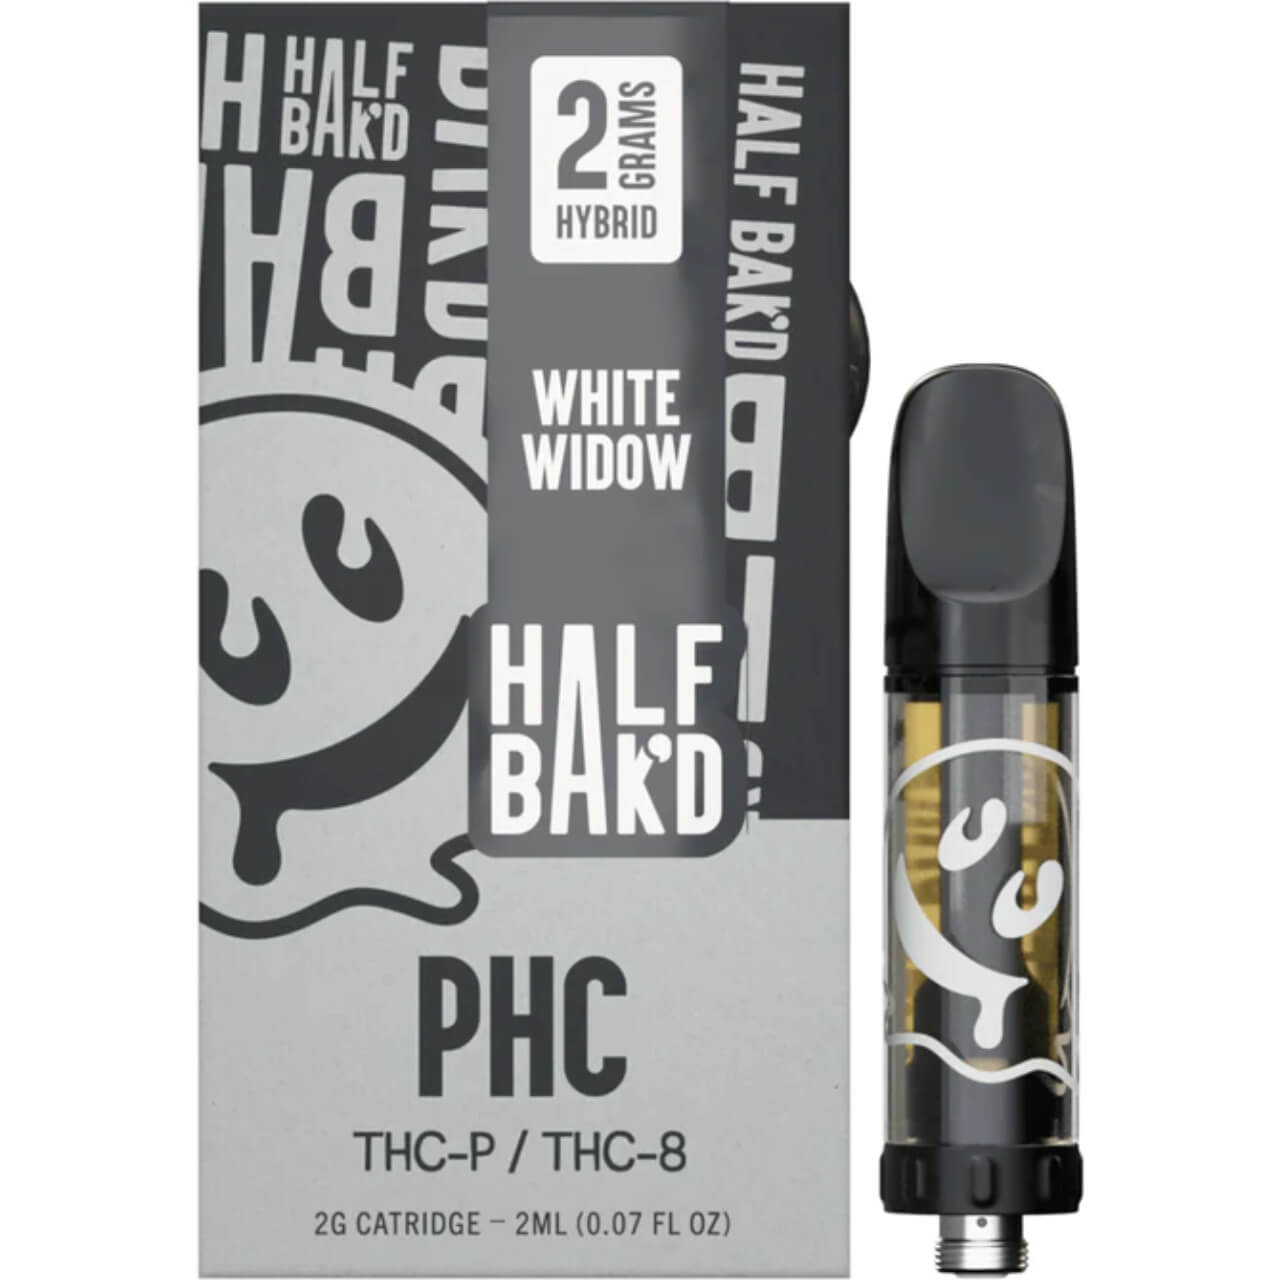 Half Bak’d PHC Blend Cartridge – 2G